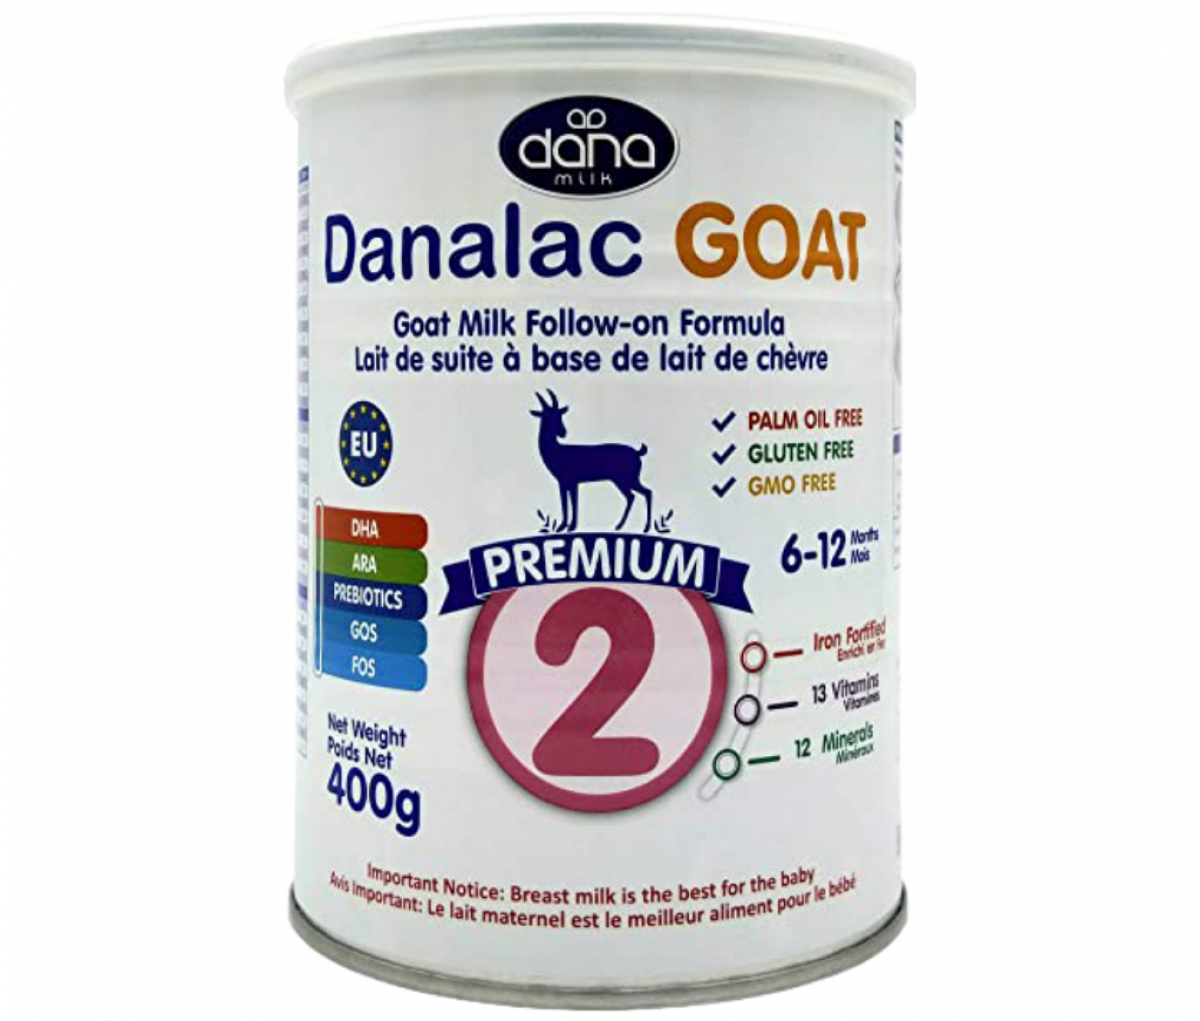 Danalac GOAT INFANT 2 - PREMIUM FORMULA 400g